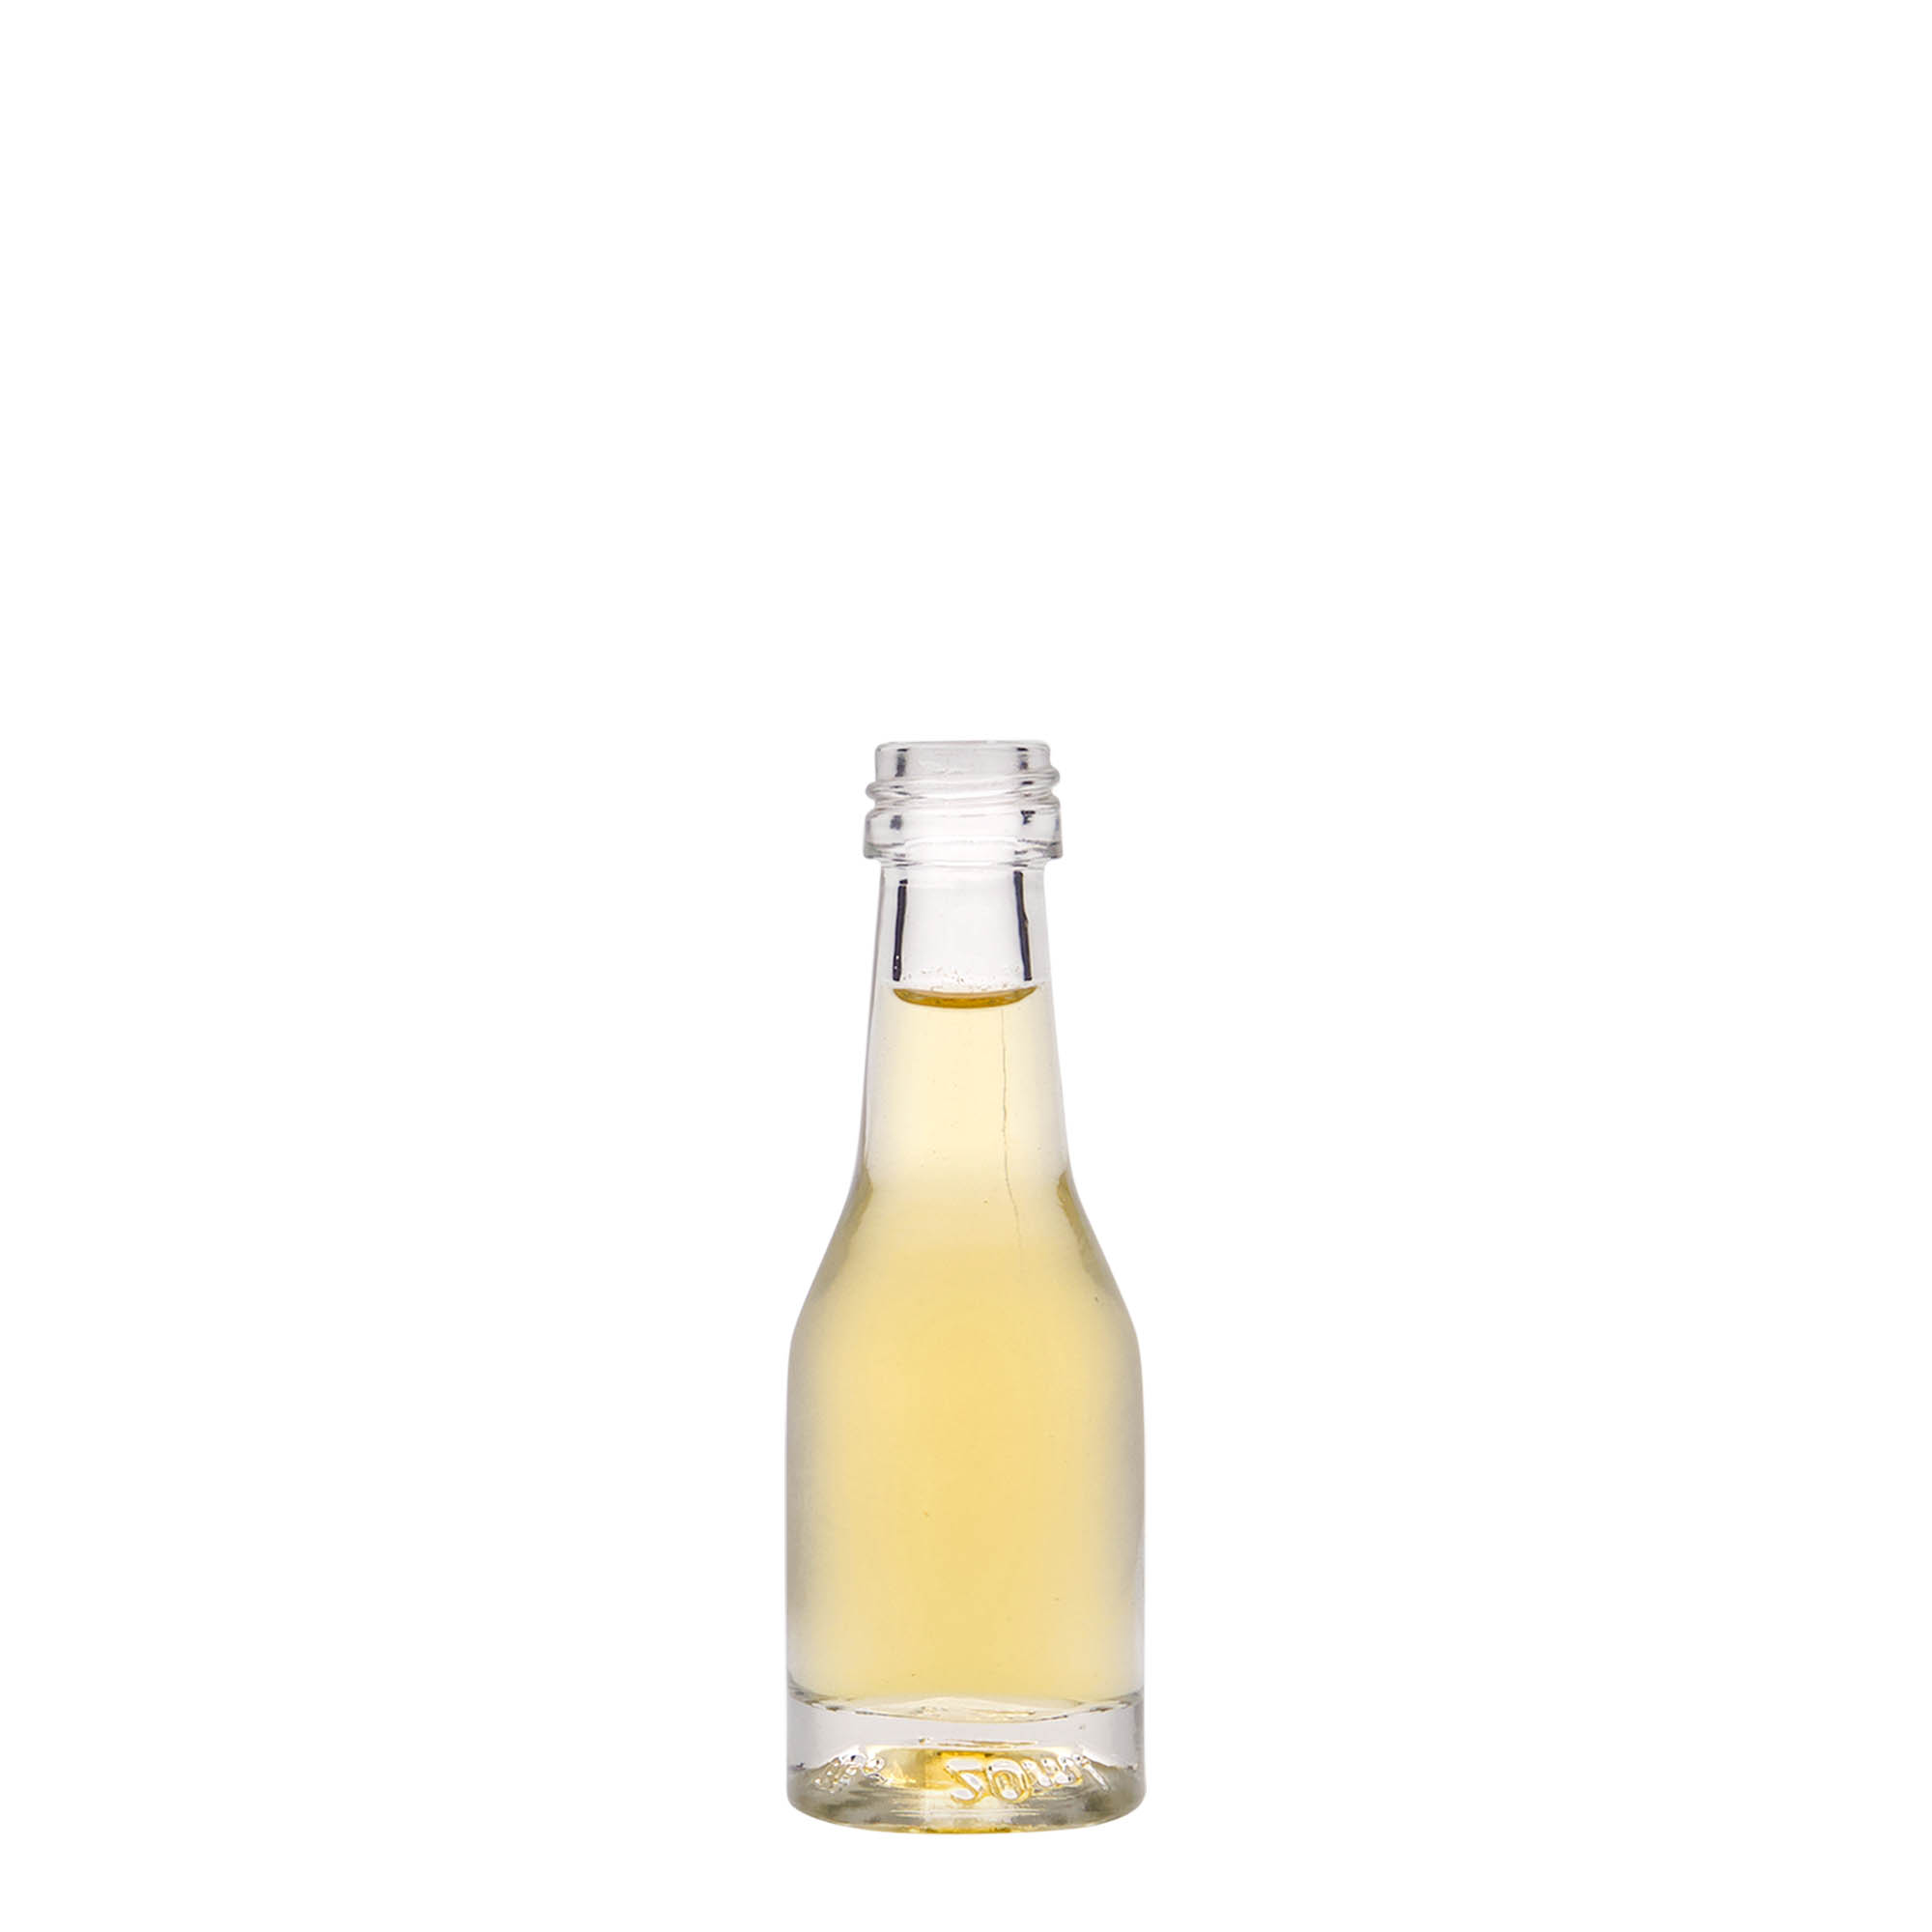 20 ml glass bottle 'Weinschlegel', closure: PP 18